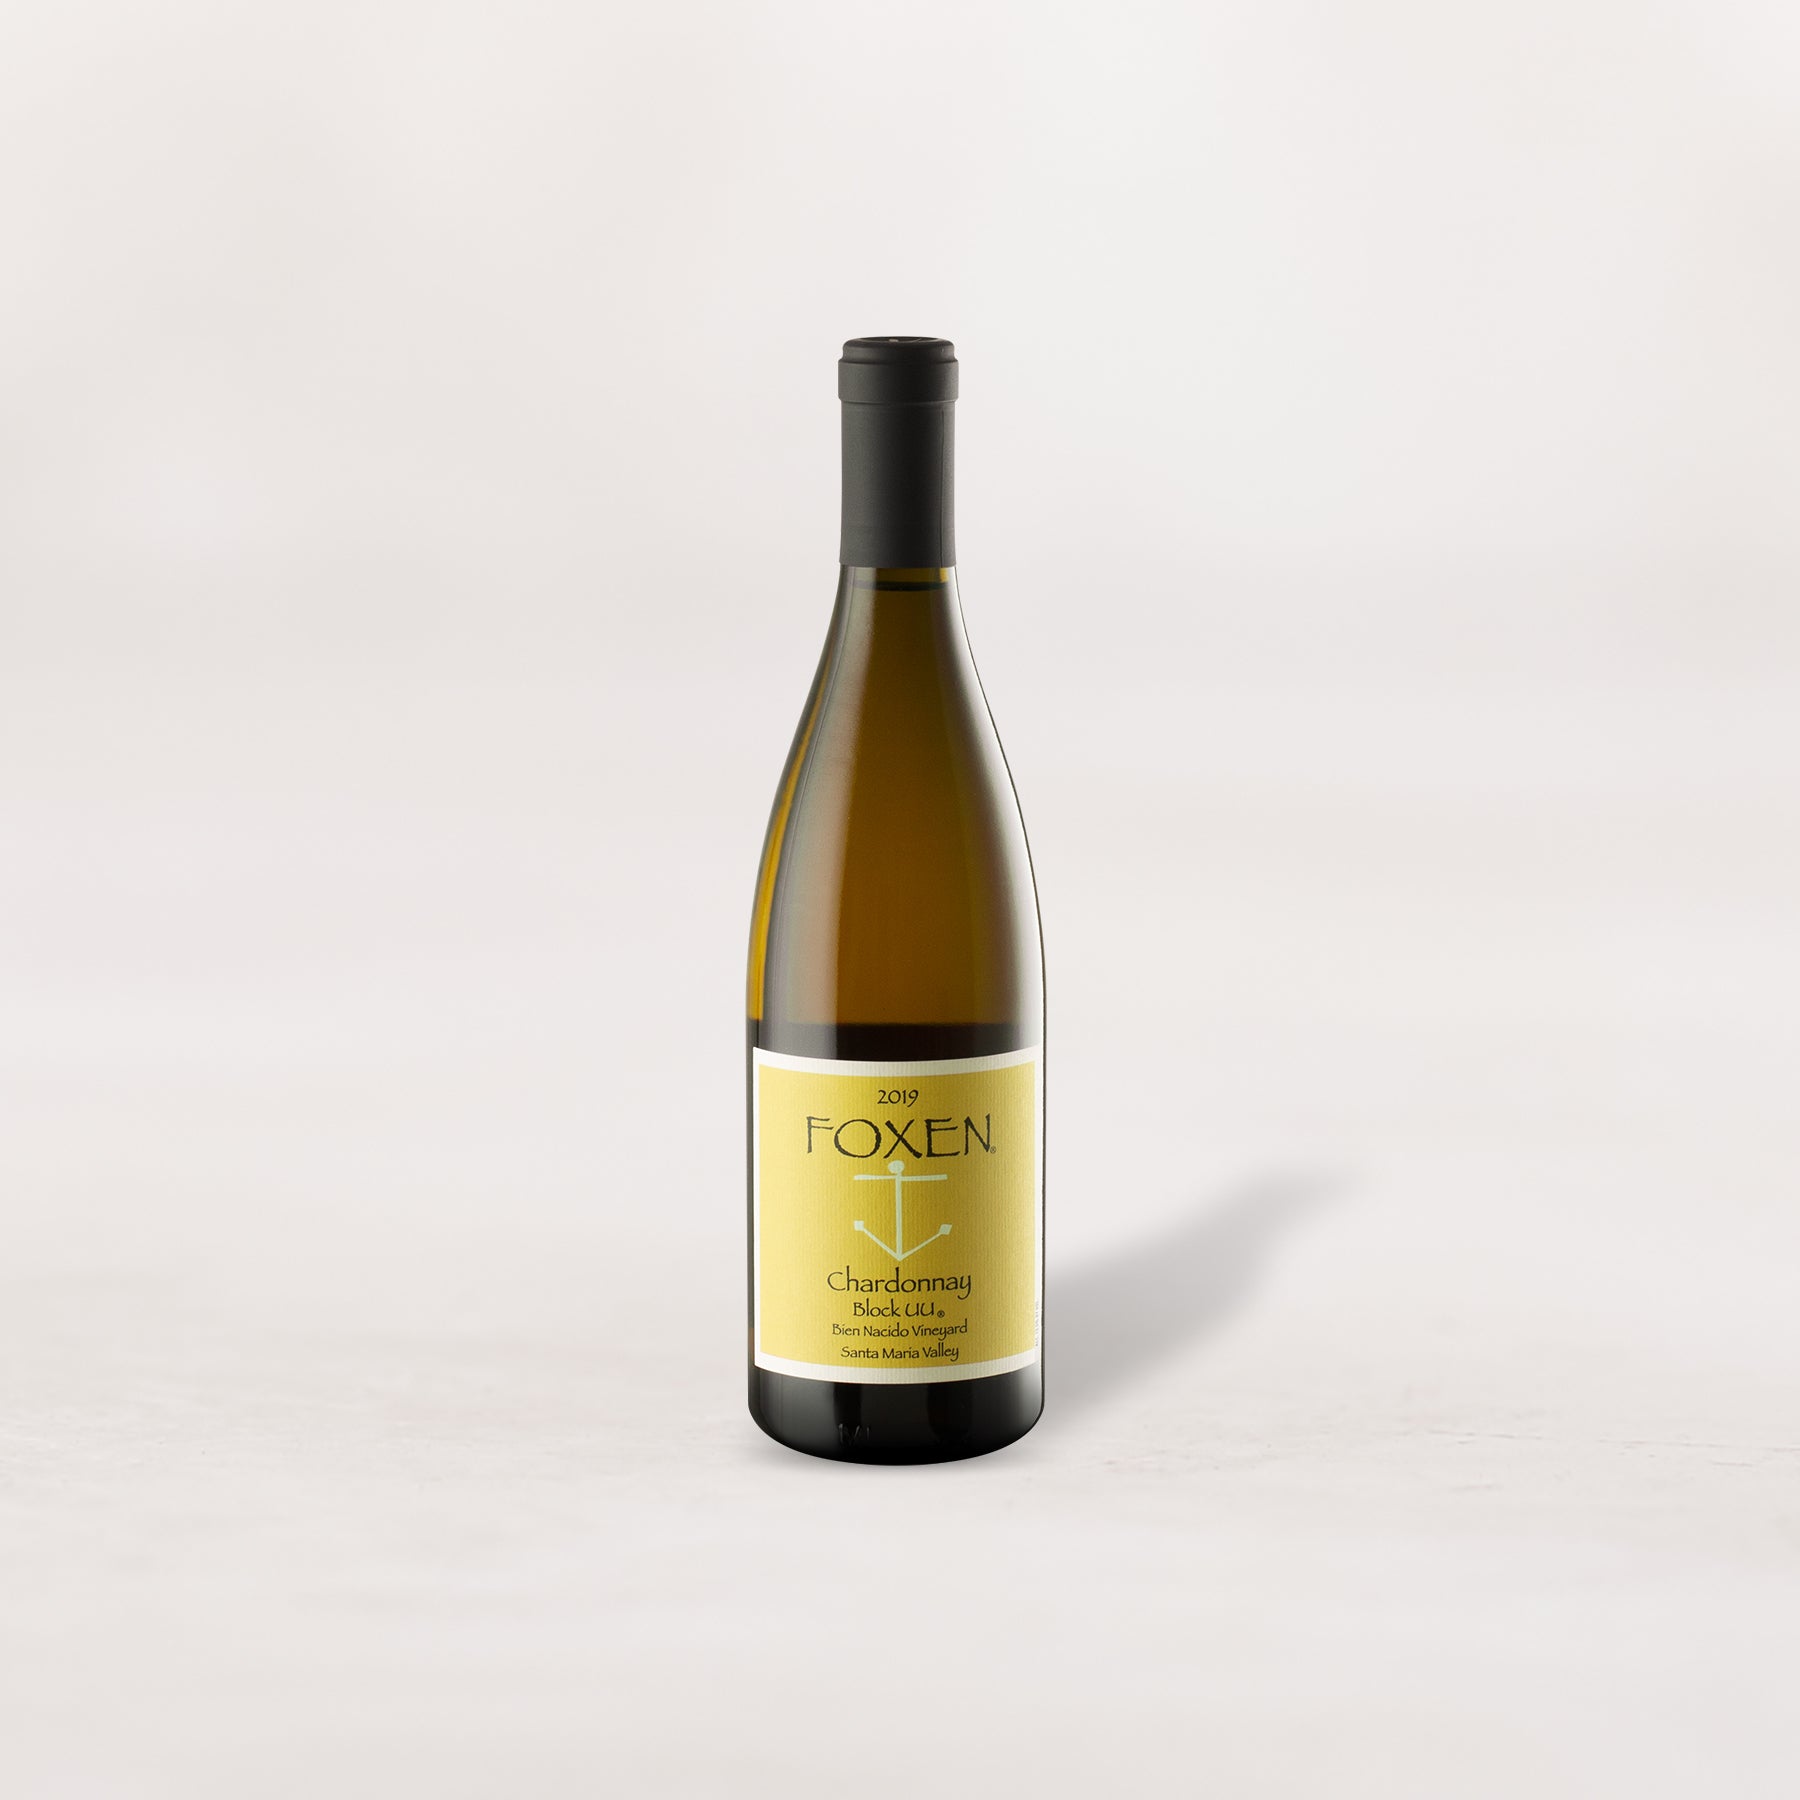 Foxen, “Bien Nacido Vineyard Block UU” Chardonnay